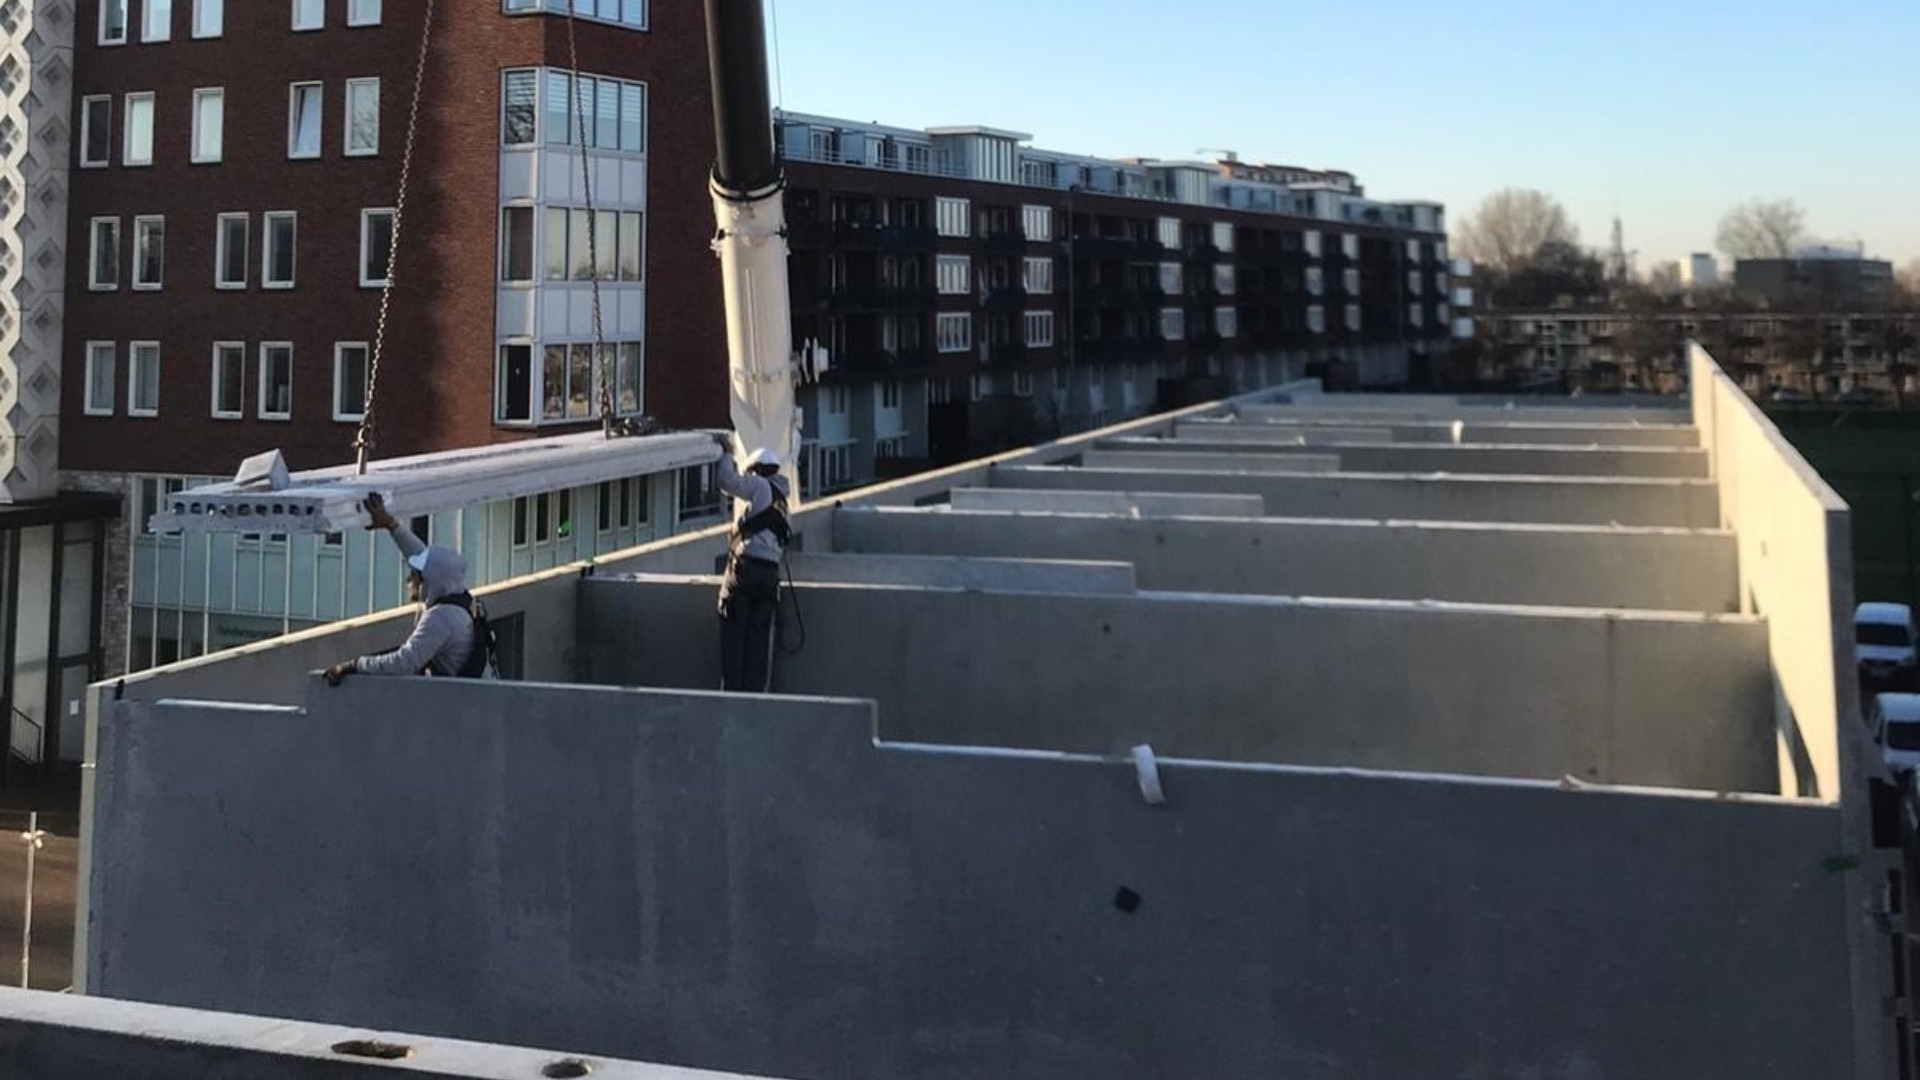 Blok A tweede verdieping - Nieuwbouwproject STOER te Haarlem. 